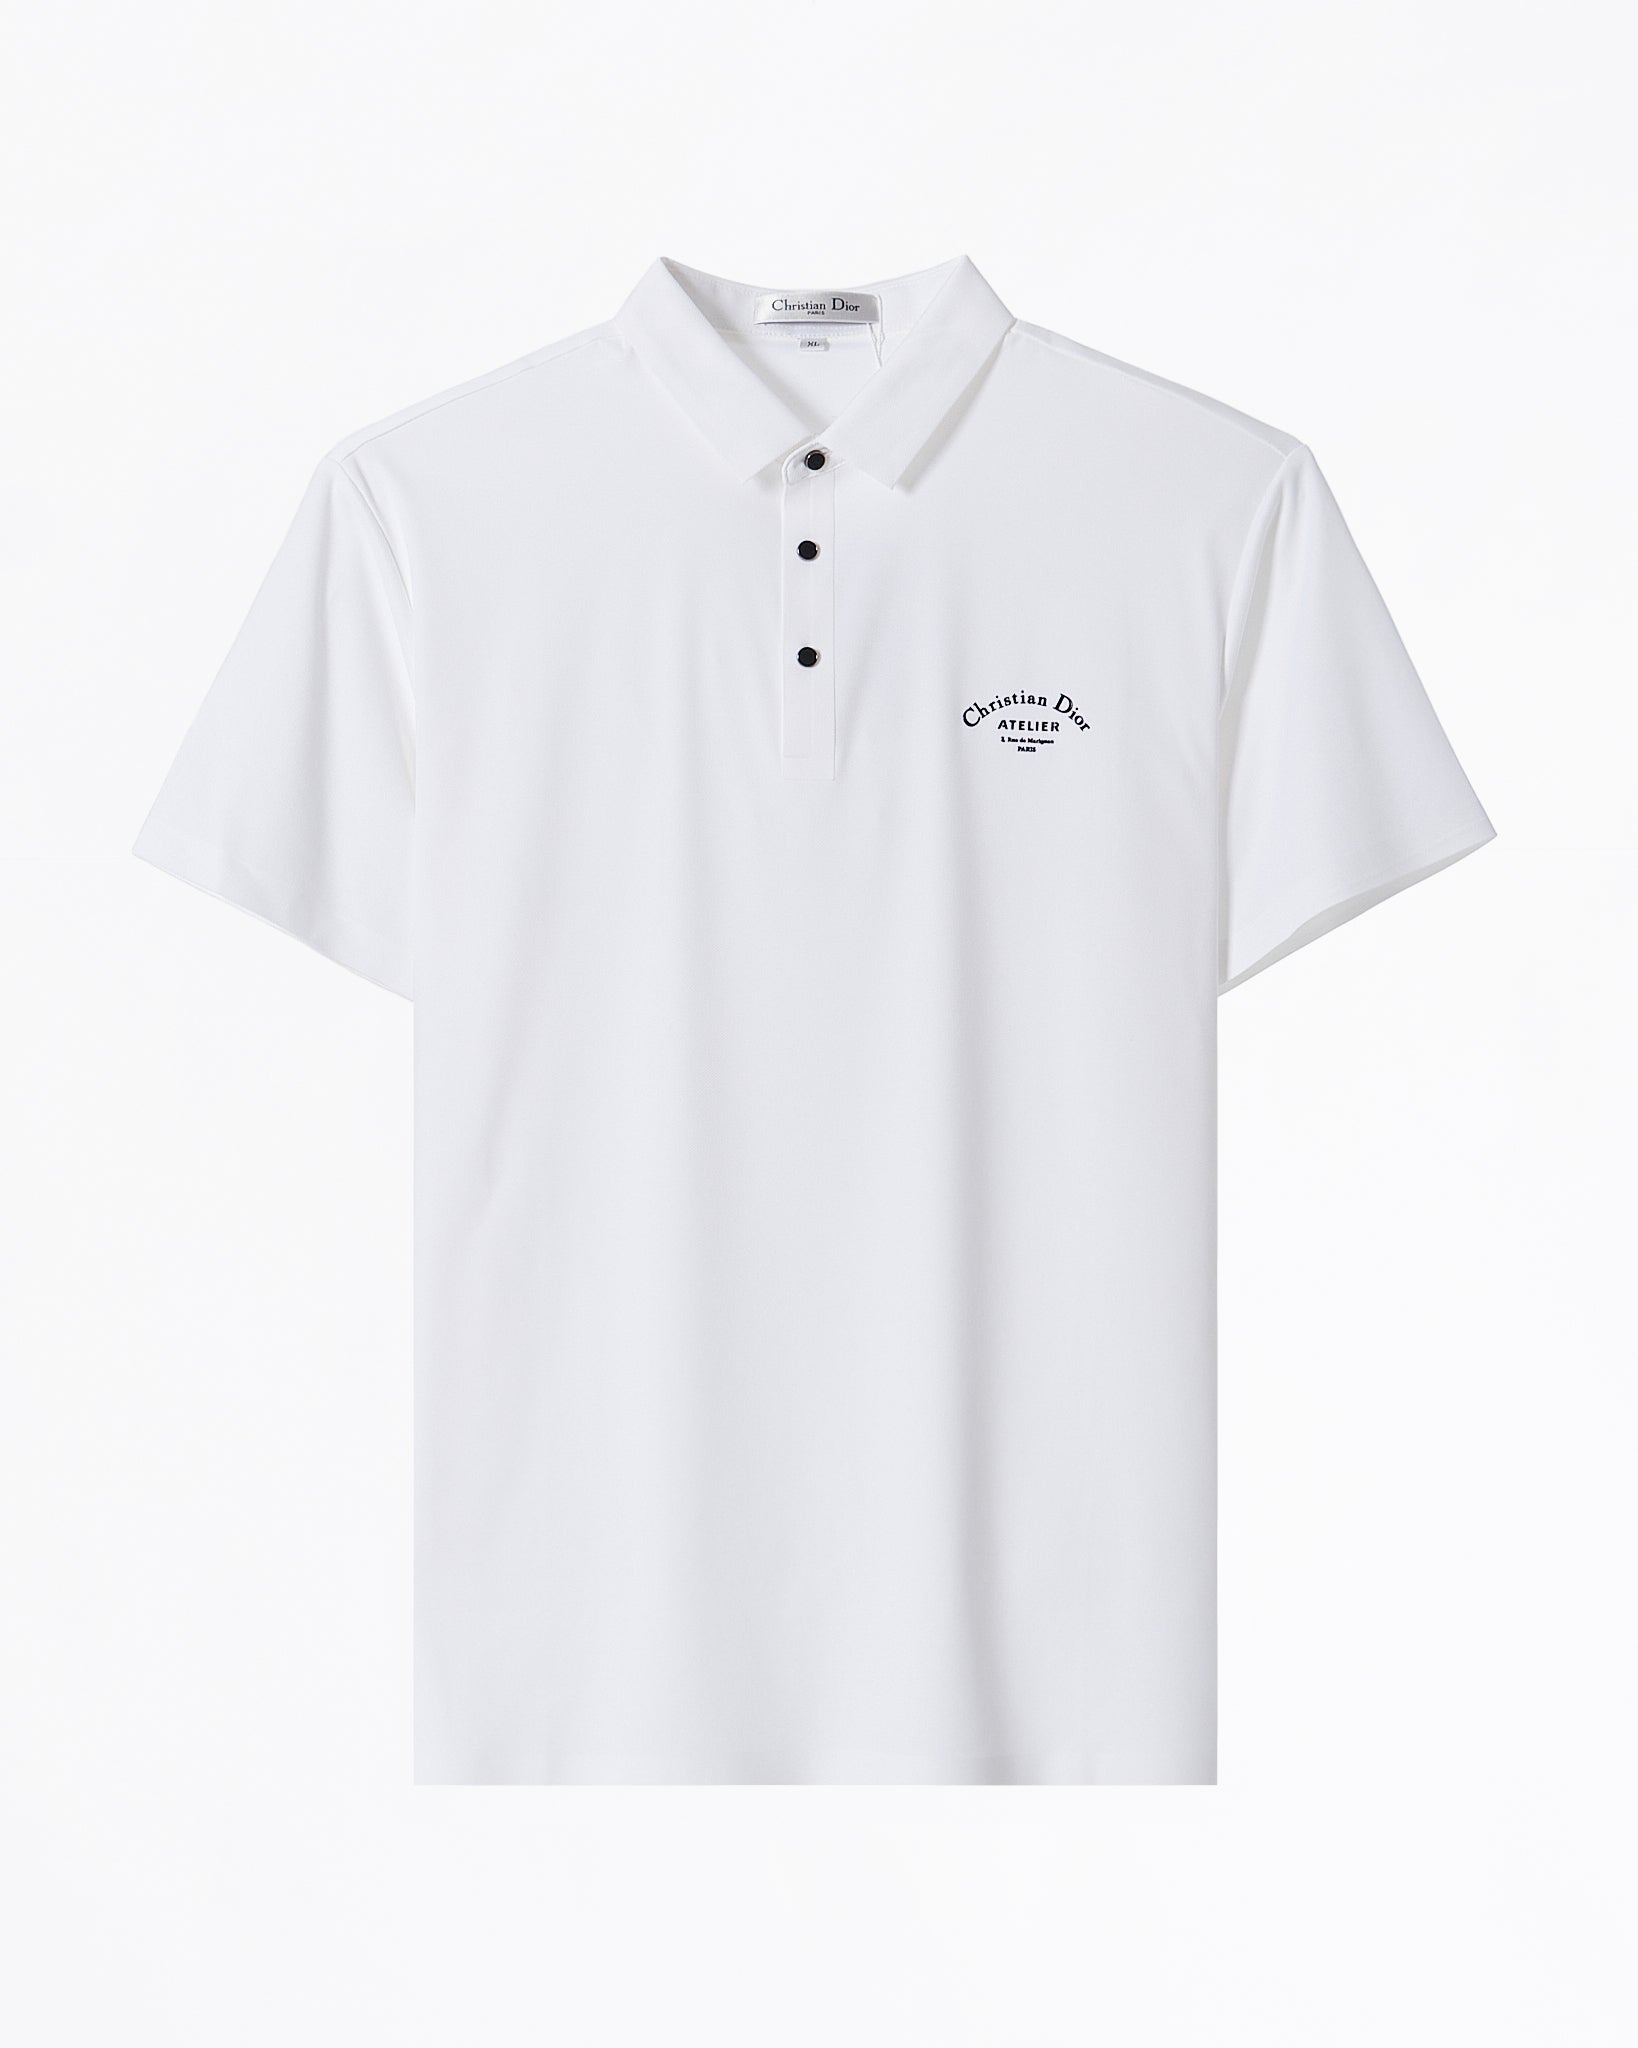 CD Logo Printed Men White Polo Shirt 57.90